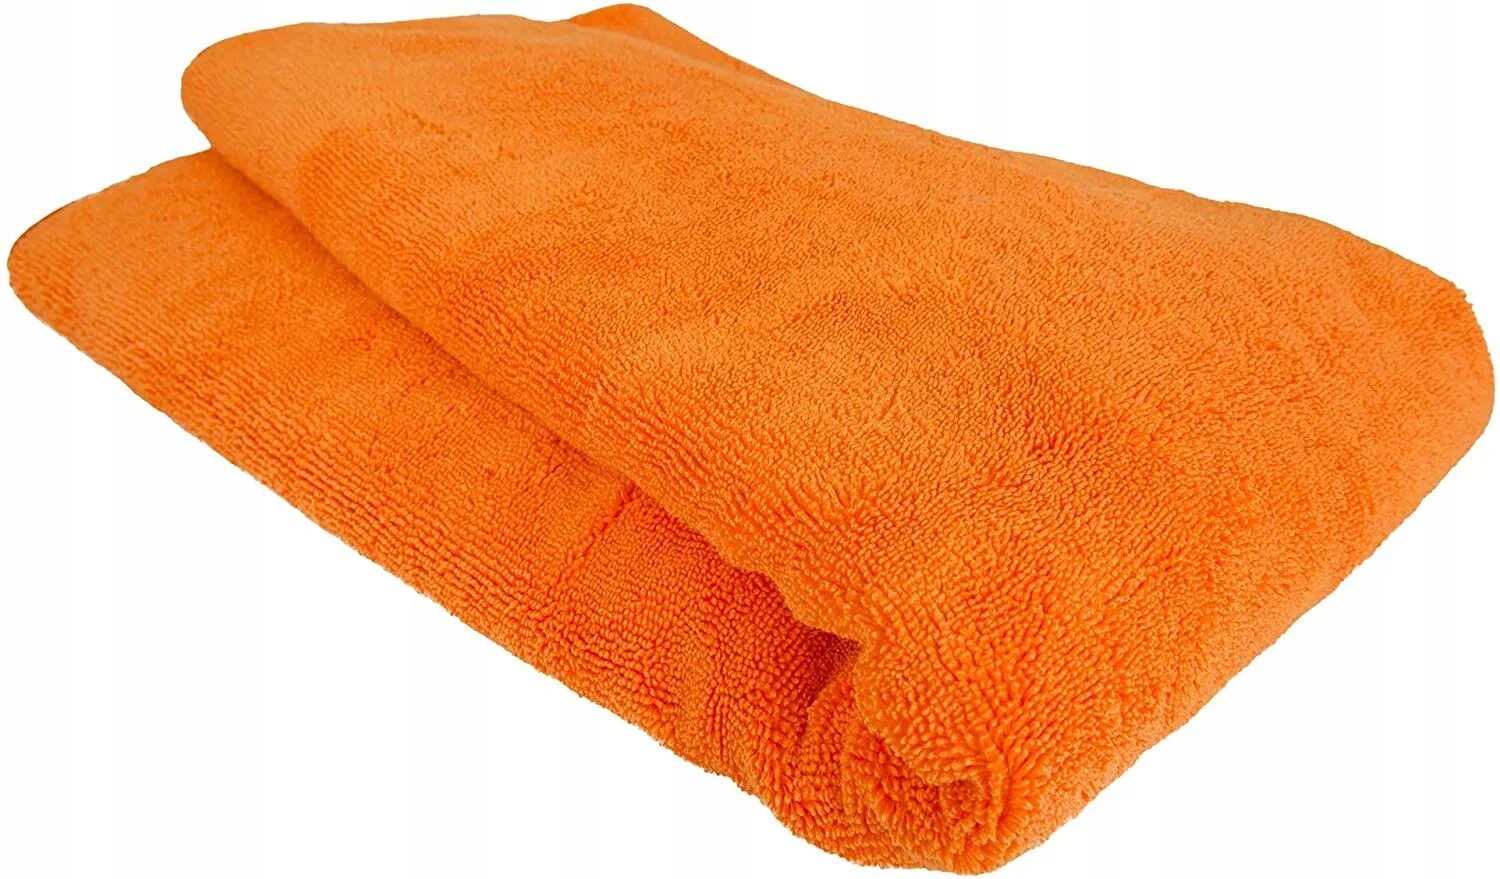 Оранжевое полотенце. Полотенце Towel Microfiber оранжевый. Микрофибра. Салфетки микрофибра оранжевые. Полотенце микрофибра оранжевое.